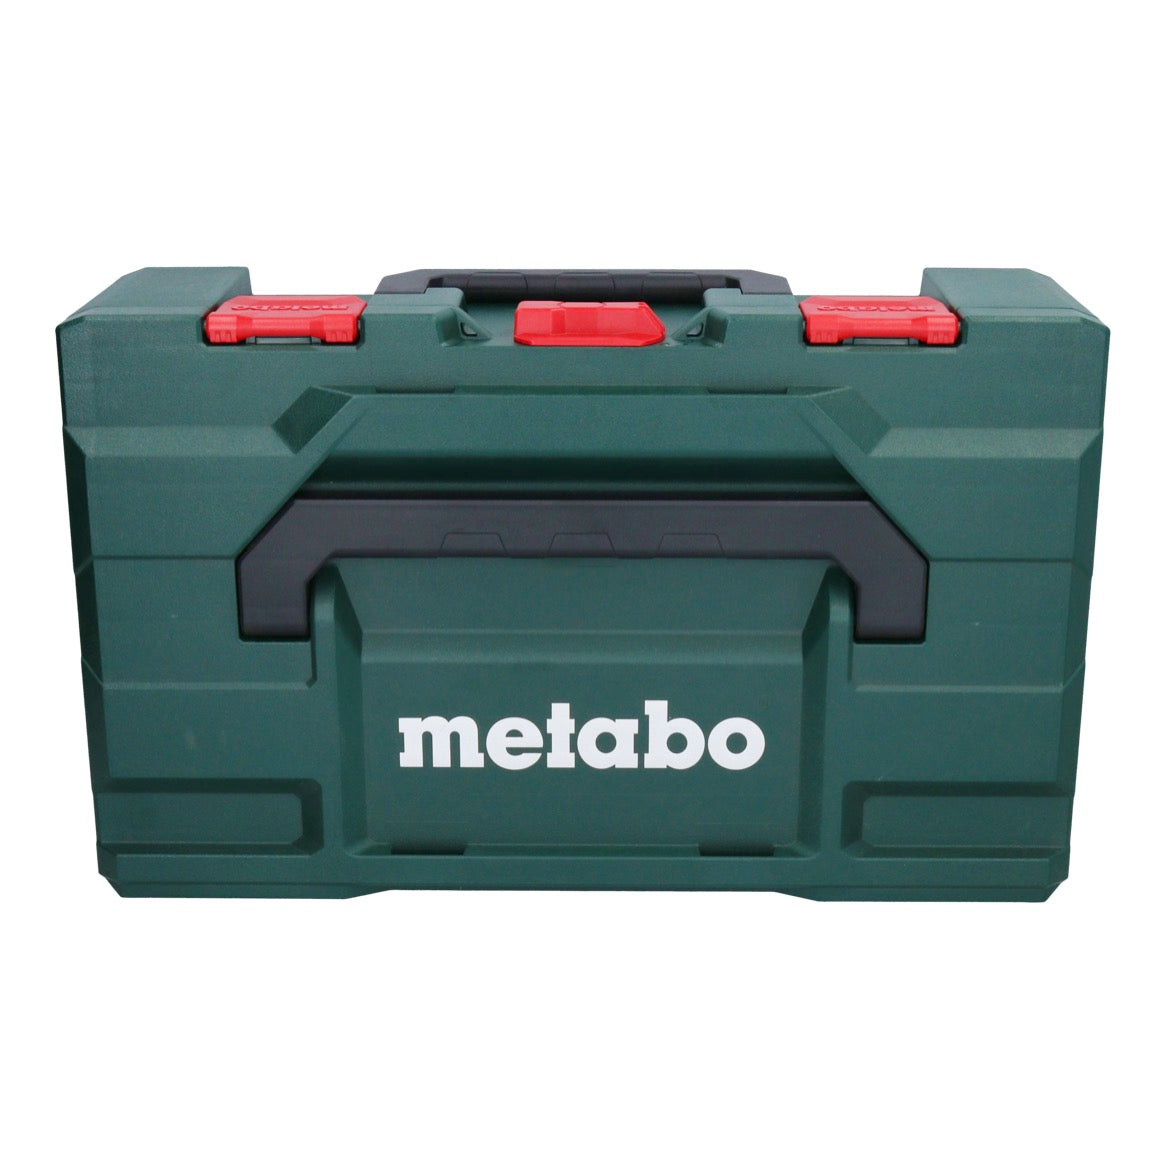 Metabo WVB 18 LTX BL 15-125 Quick Akku Winkelschleifer 18 V 125 mm Brushless + 2x Akku 4,0 Ah + Ladegerät + metaBOX